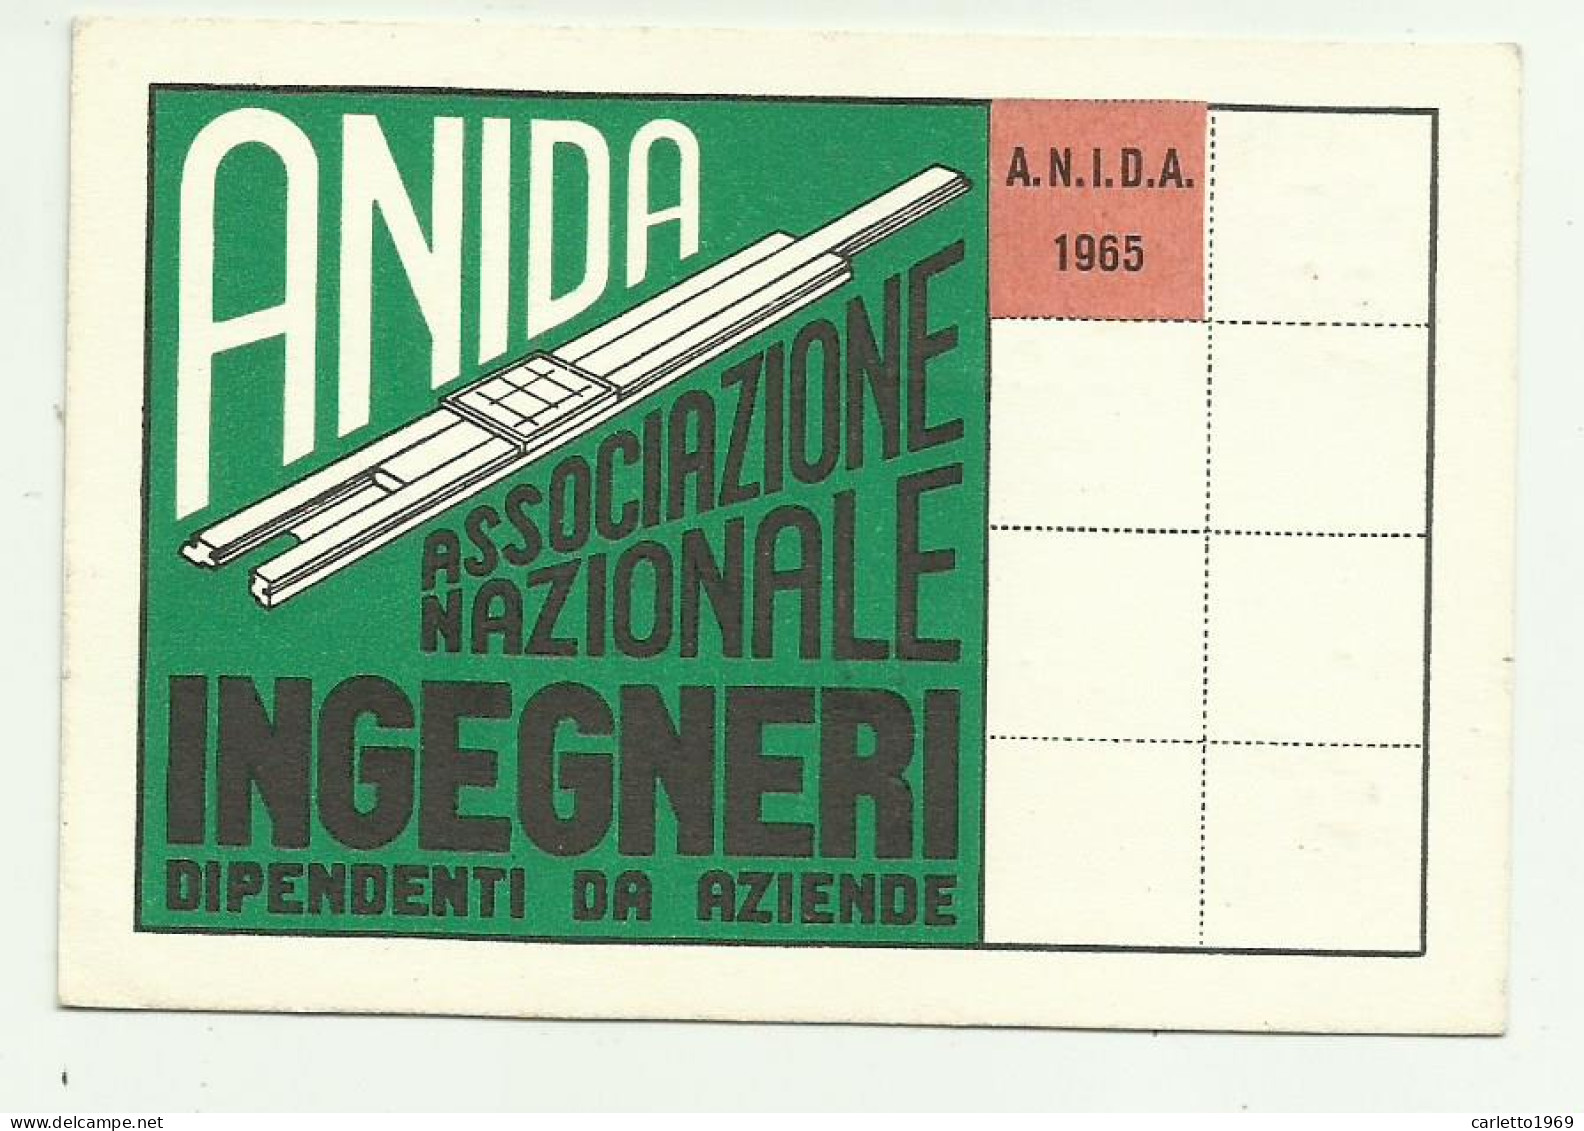 TESSERA ANIDA INGEGNERI 1965 - Cartes De Membre